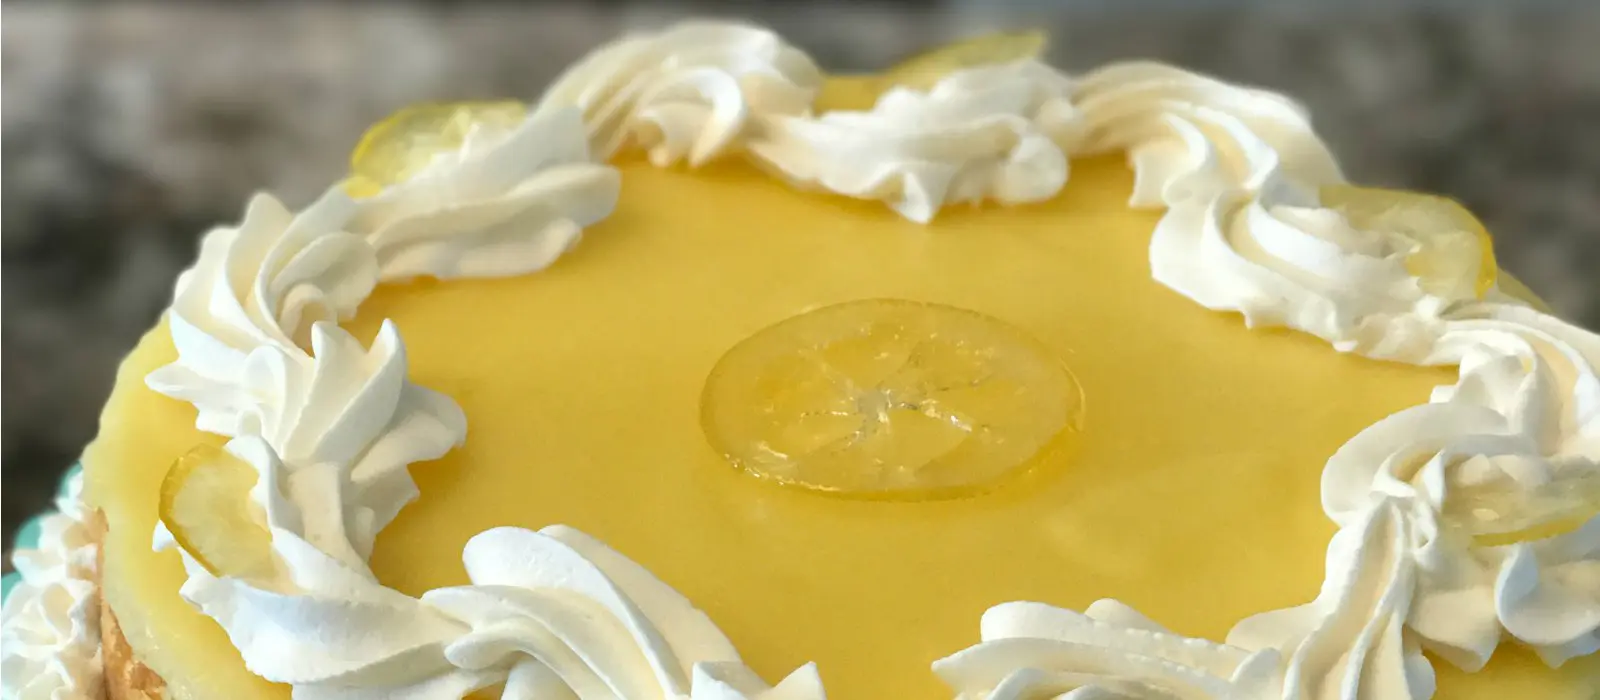 Luscious Lemon Cheesecake